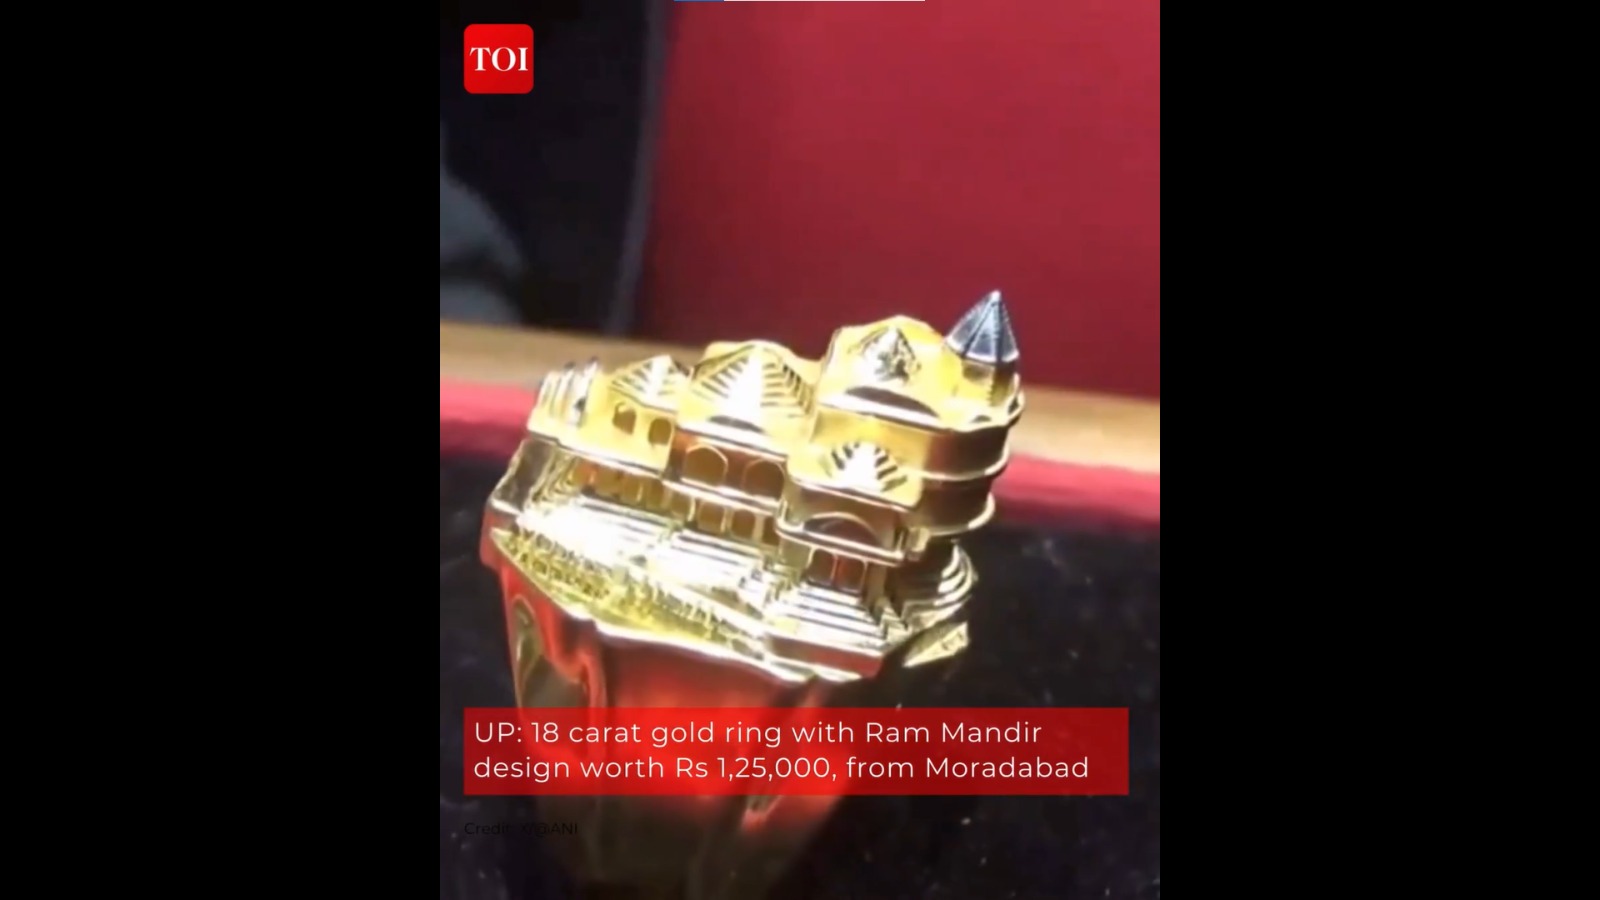 UP: 18 carat gold ring with #RamMandir design worth Rs 1,25,000, from Moradabad